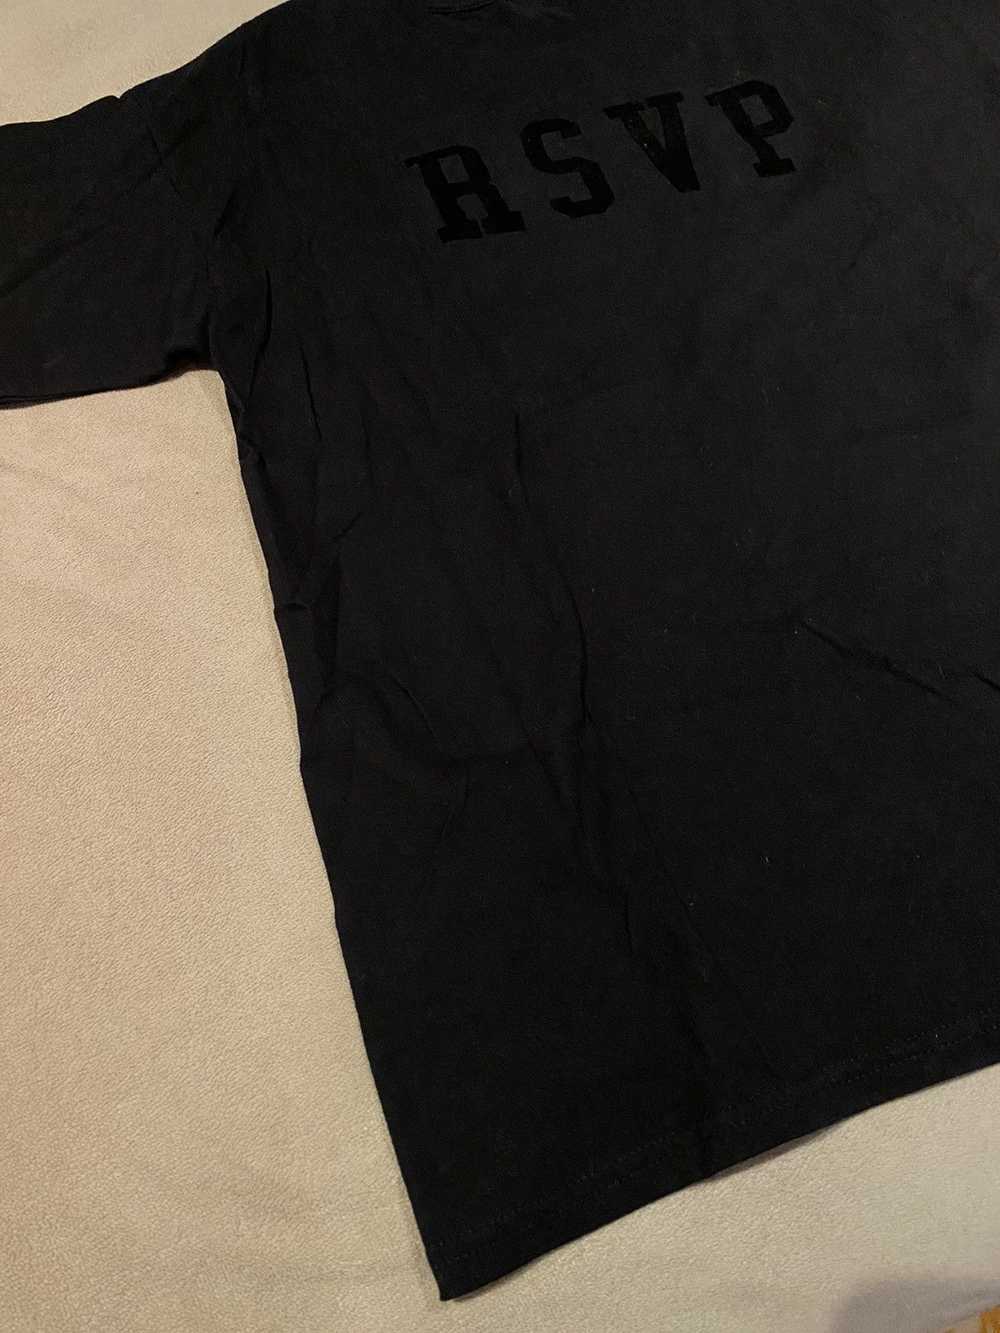 Rsvp Gallery RSVP Gallery Black T-Shirt Size XL - image 5